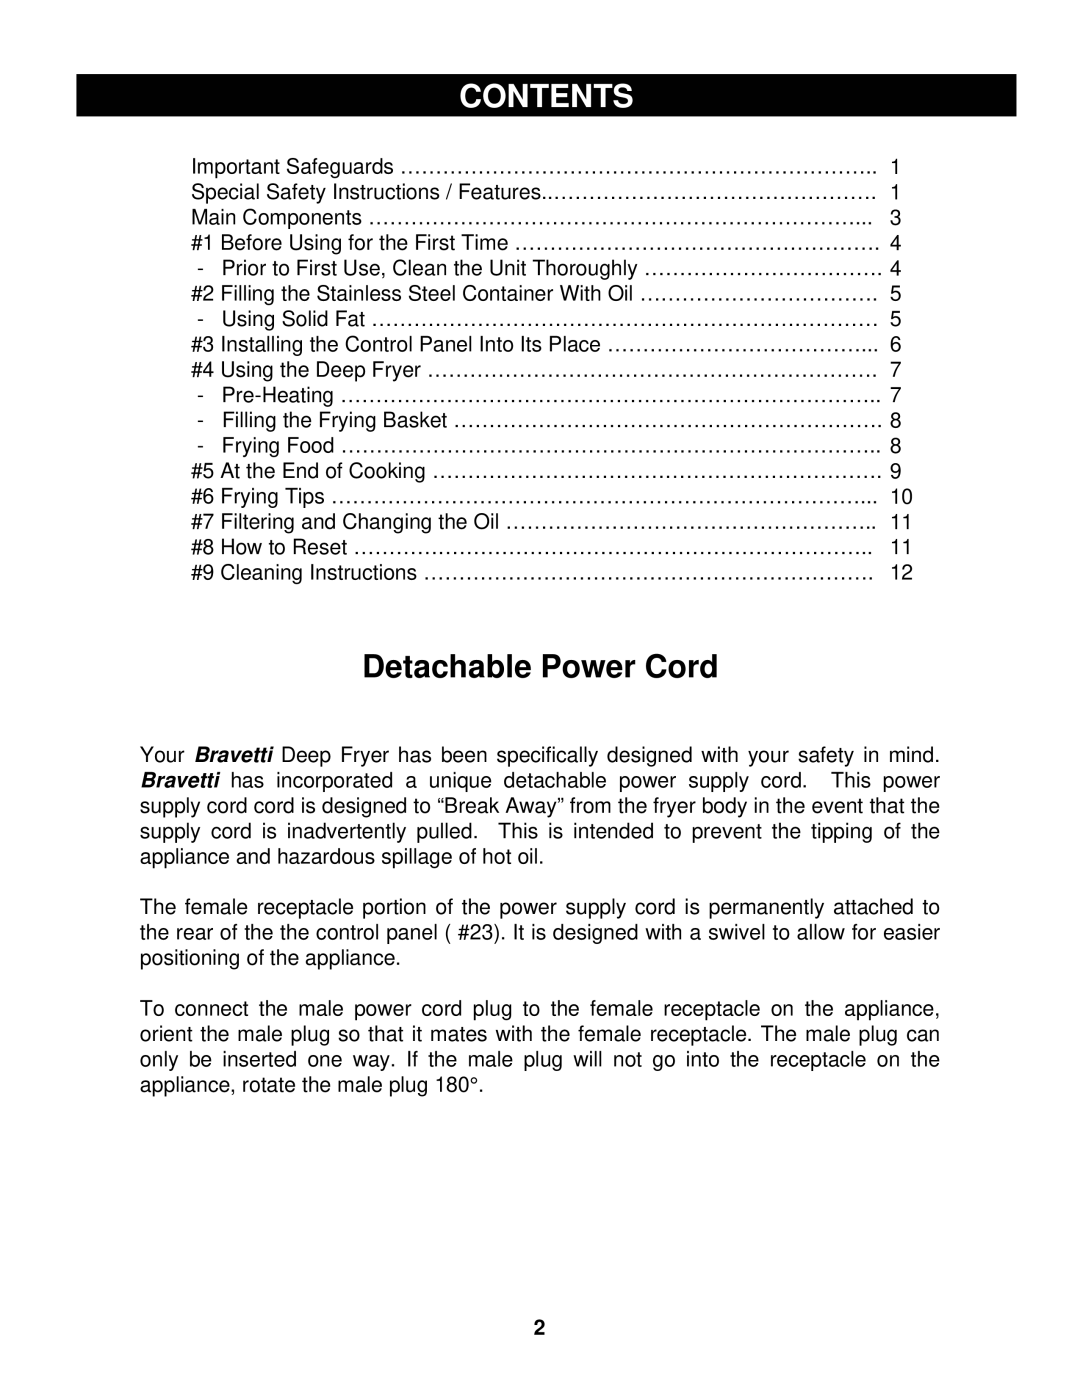 Euro-Pro BF160 manual Contents, Detachable Power Cord 